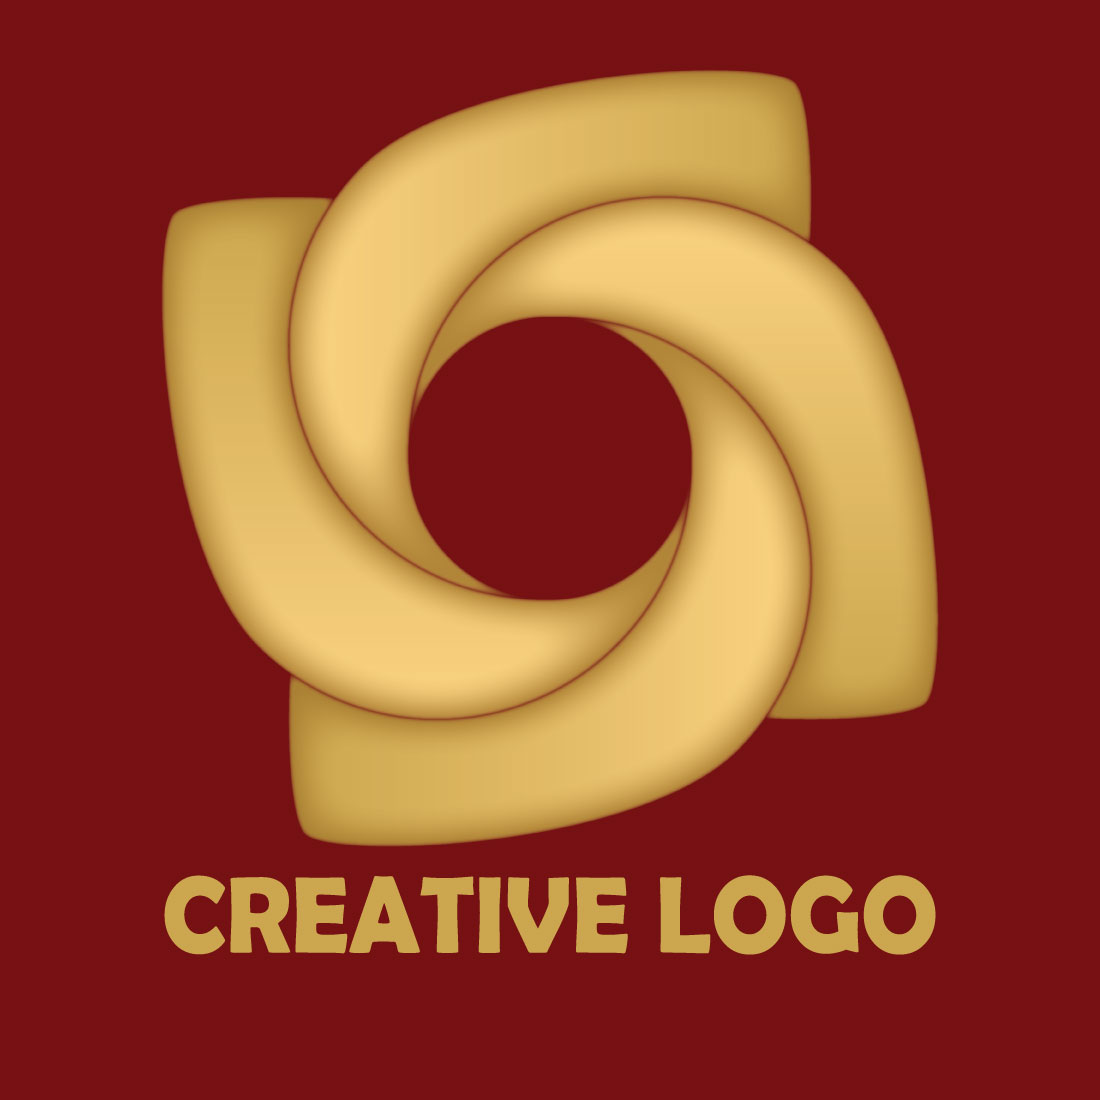 creative logo 2 151